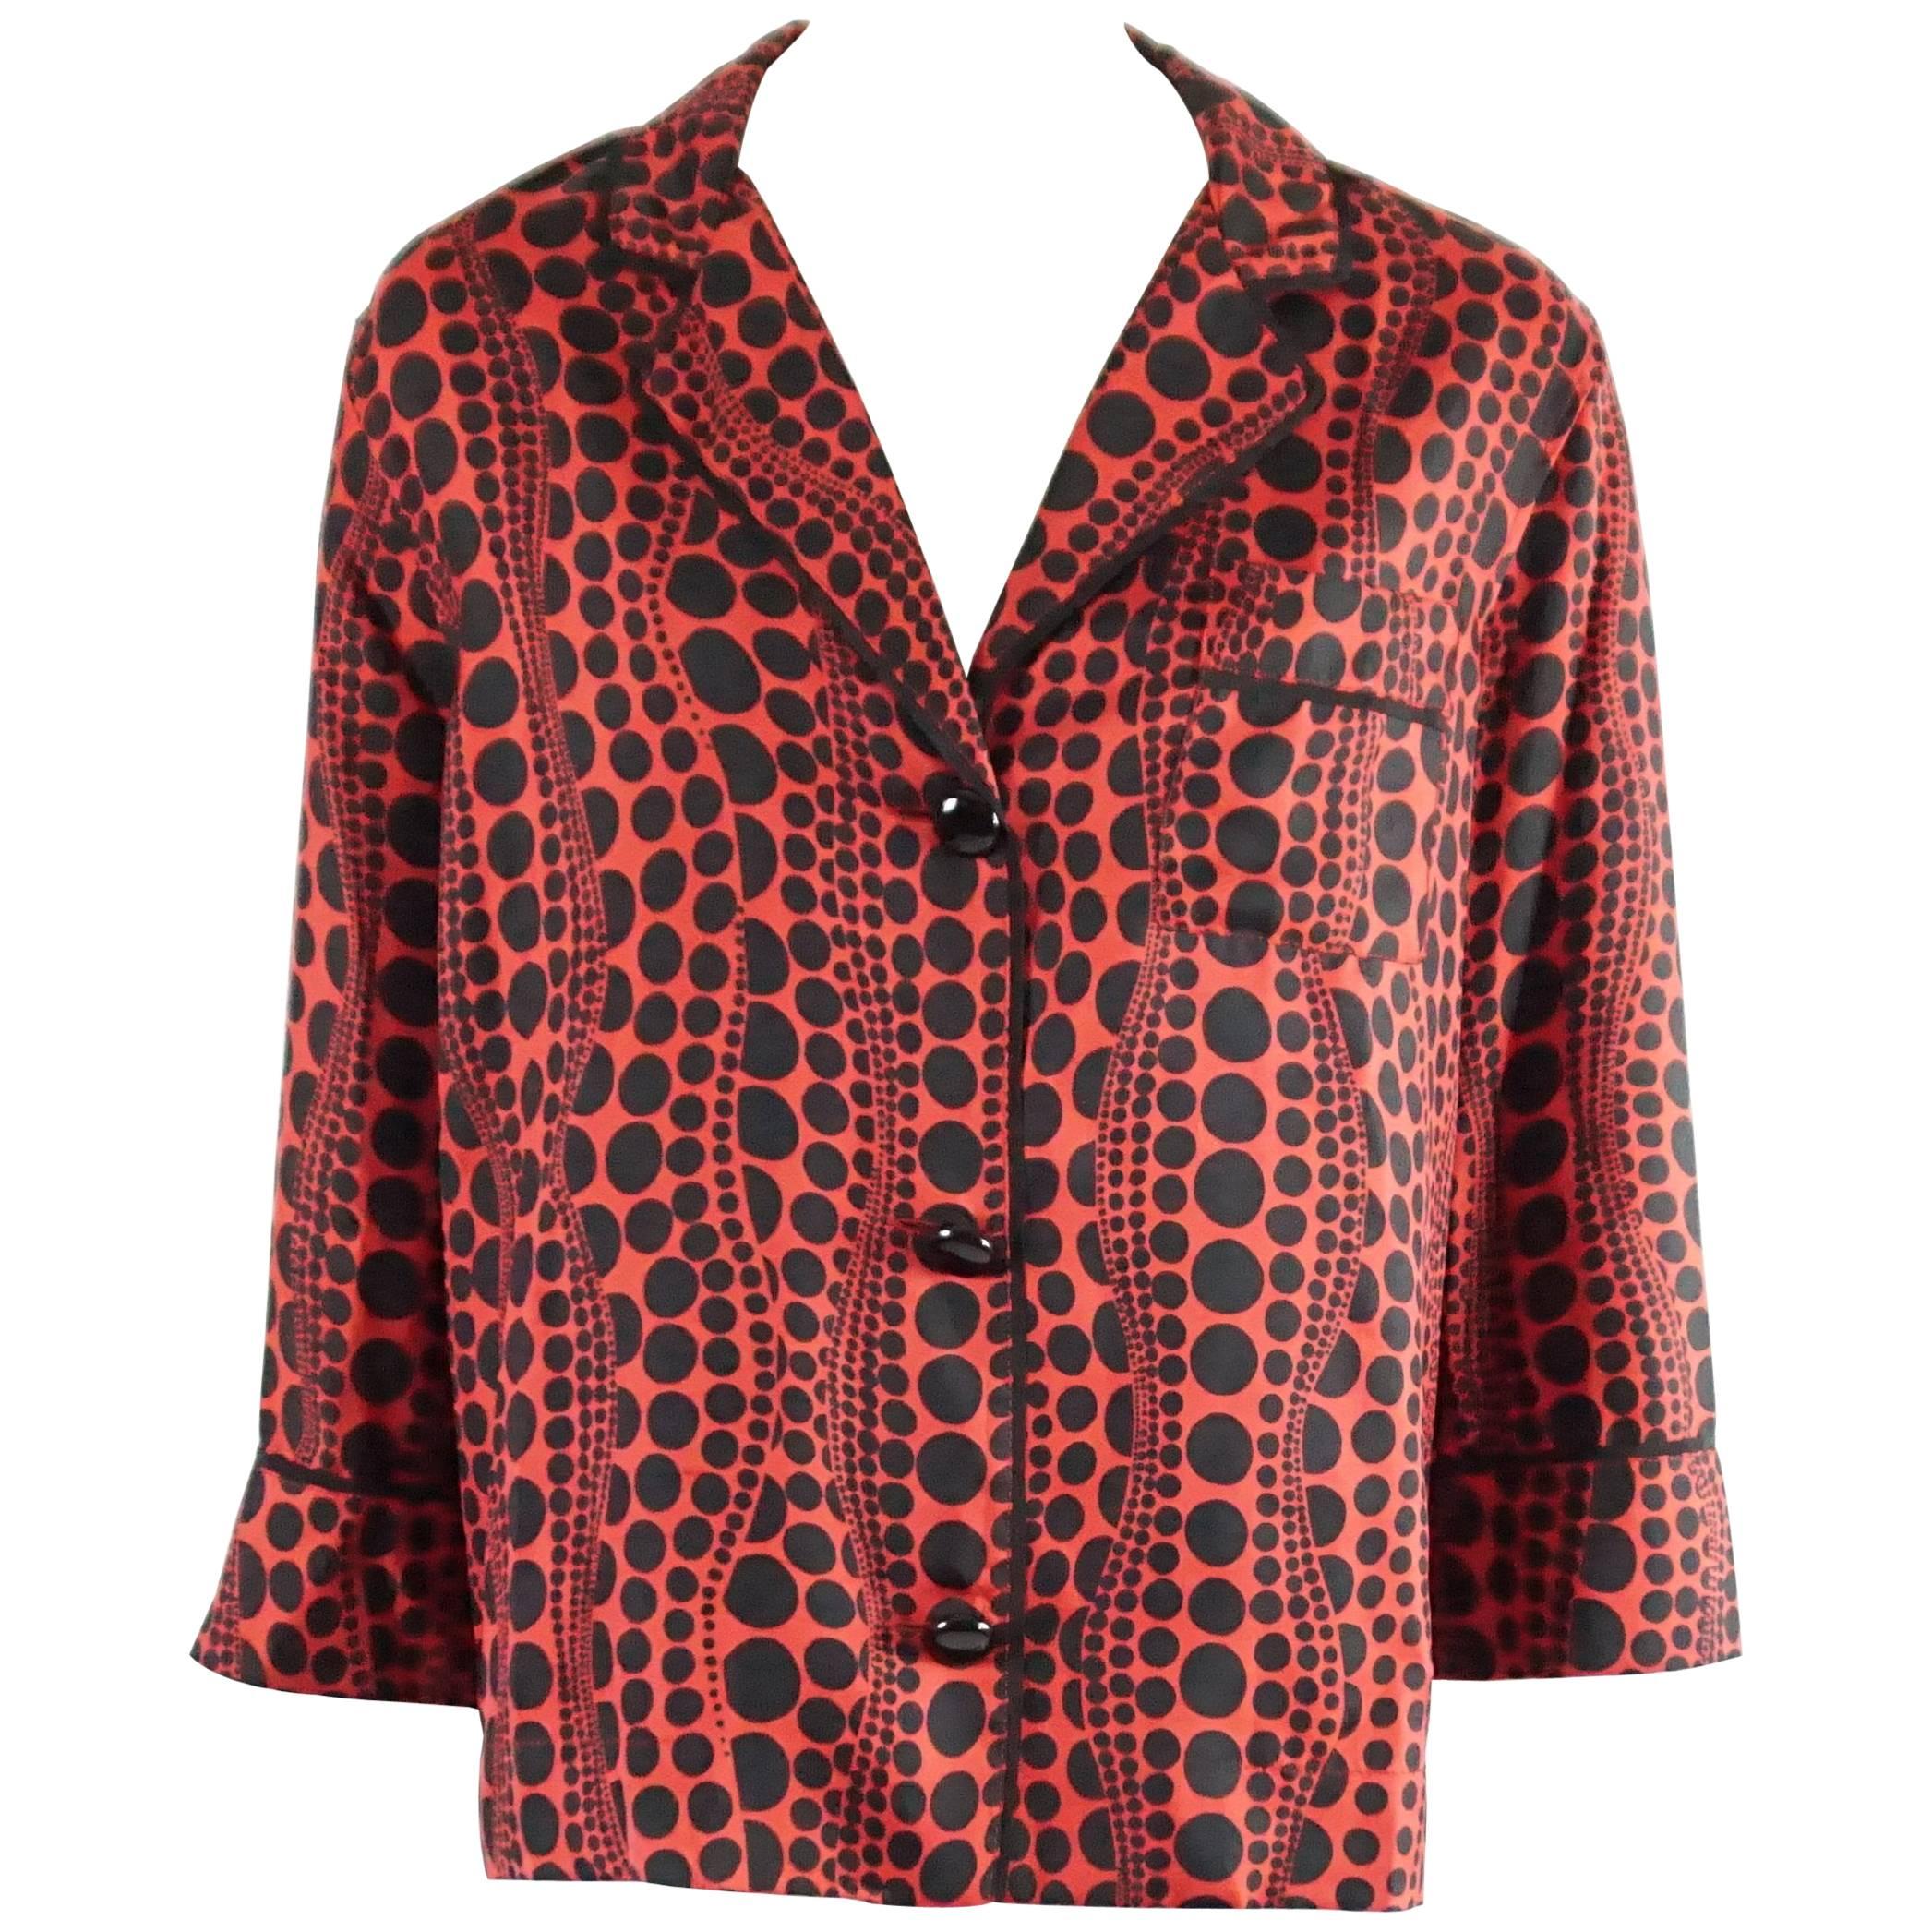 Louis Vuitton Yayoi Kusama Red and Black Printed Shirt - 36